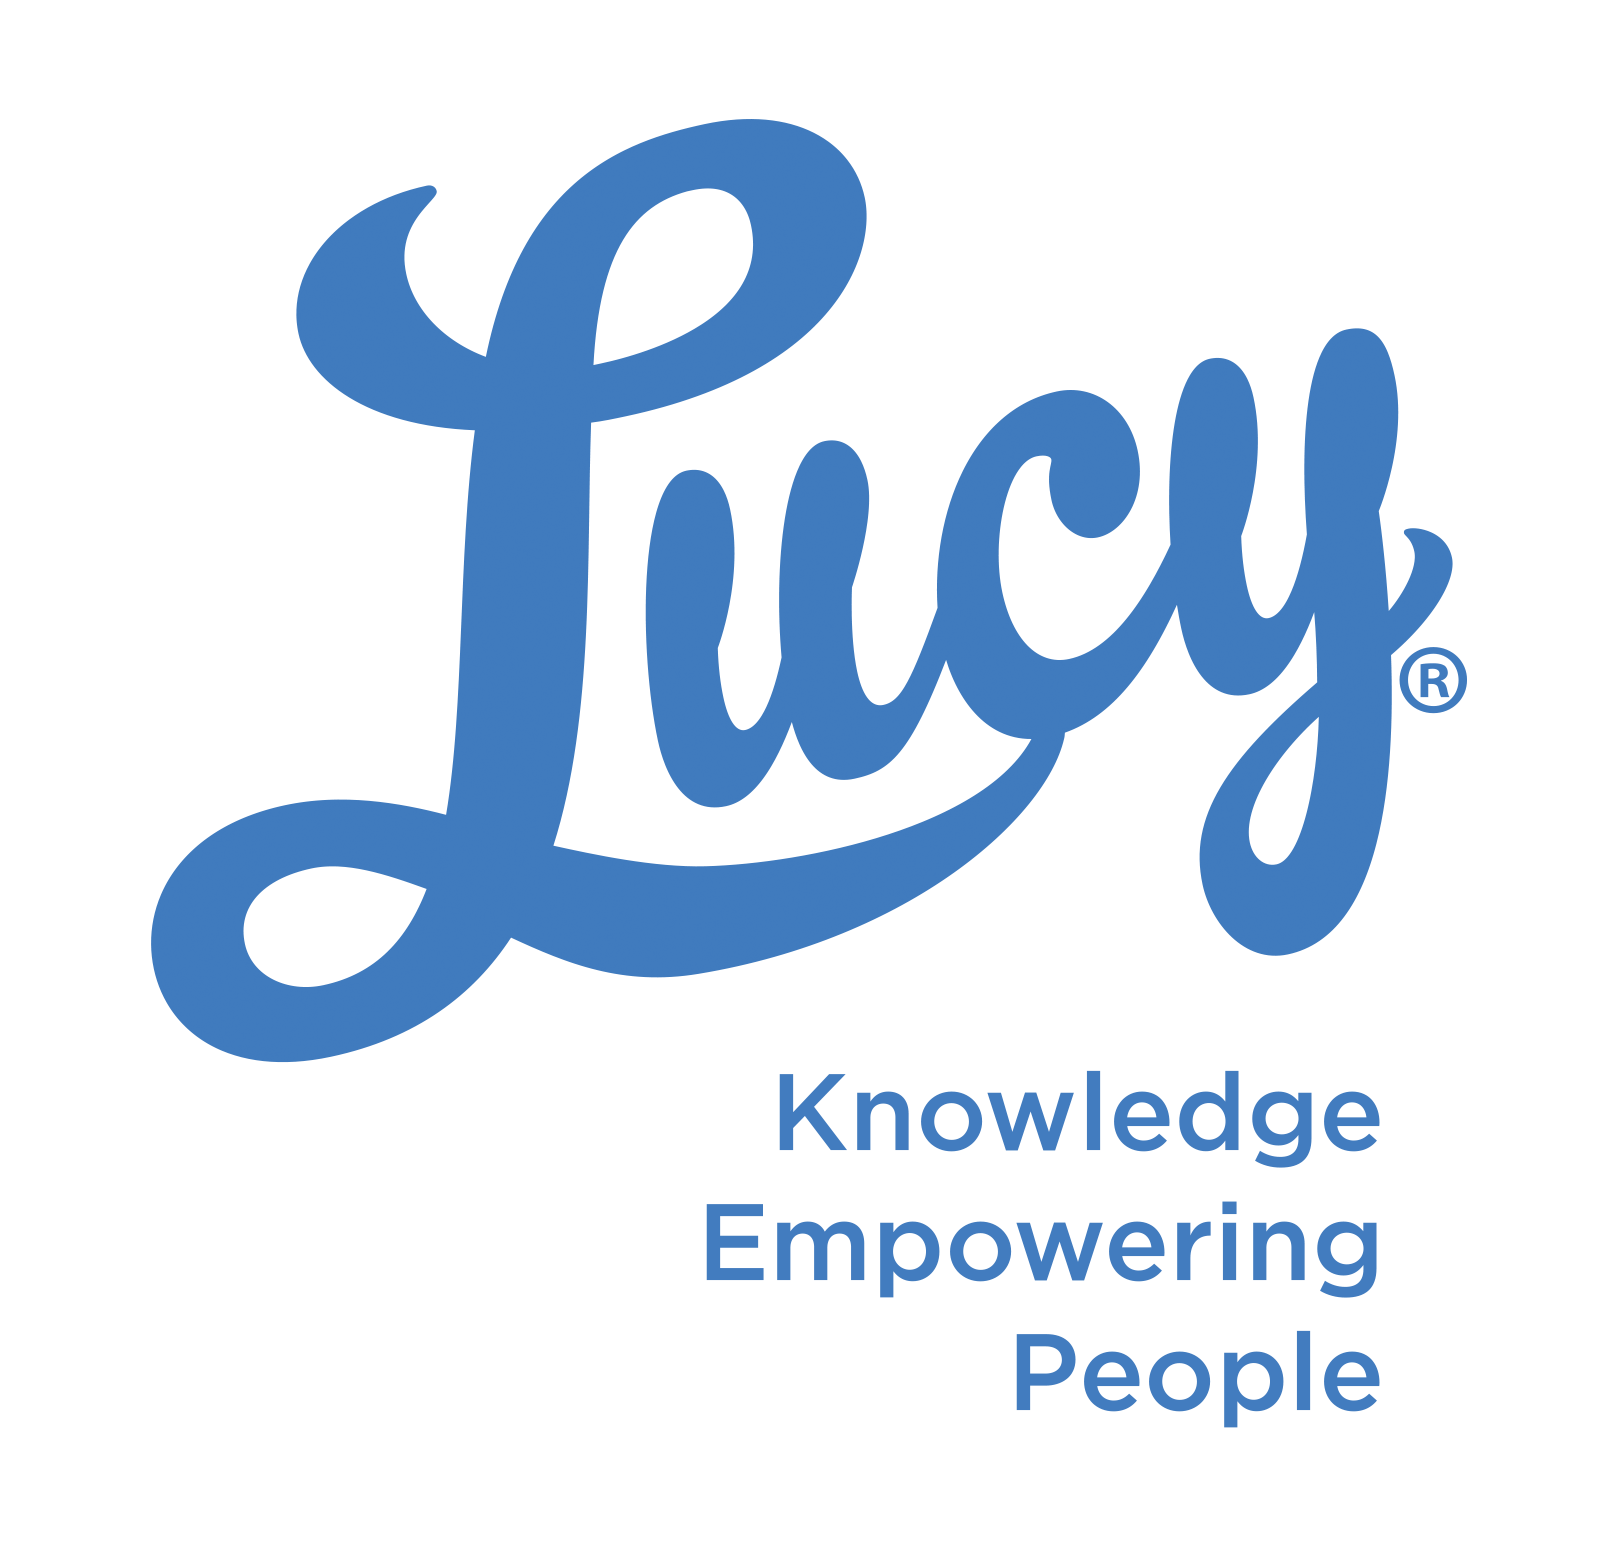 LucyLogomantrabluesmaller size readable